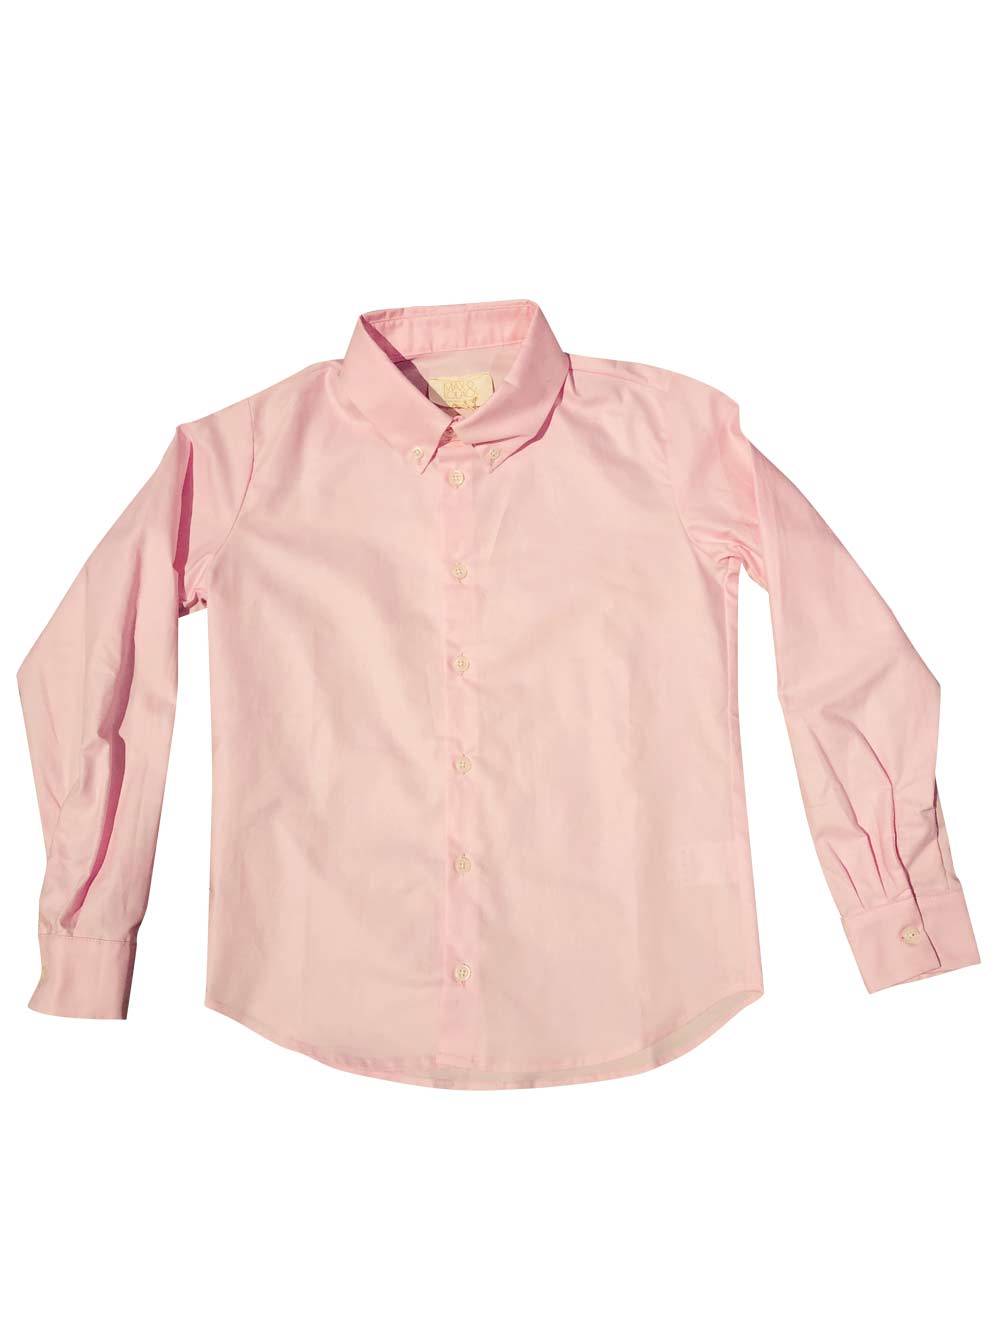 Chemlico Pink Shirt